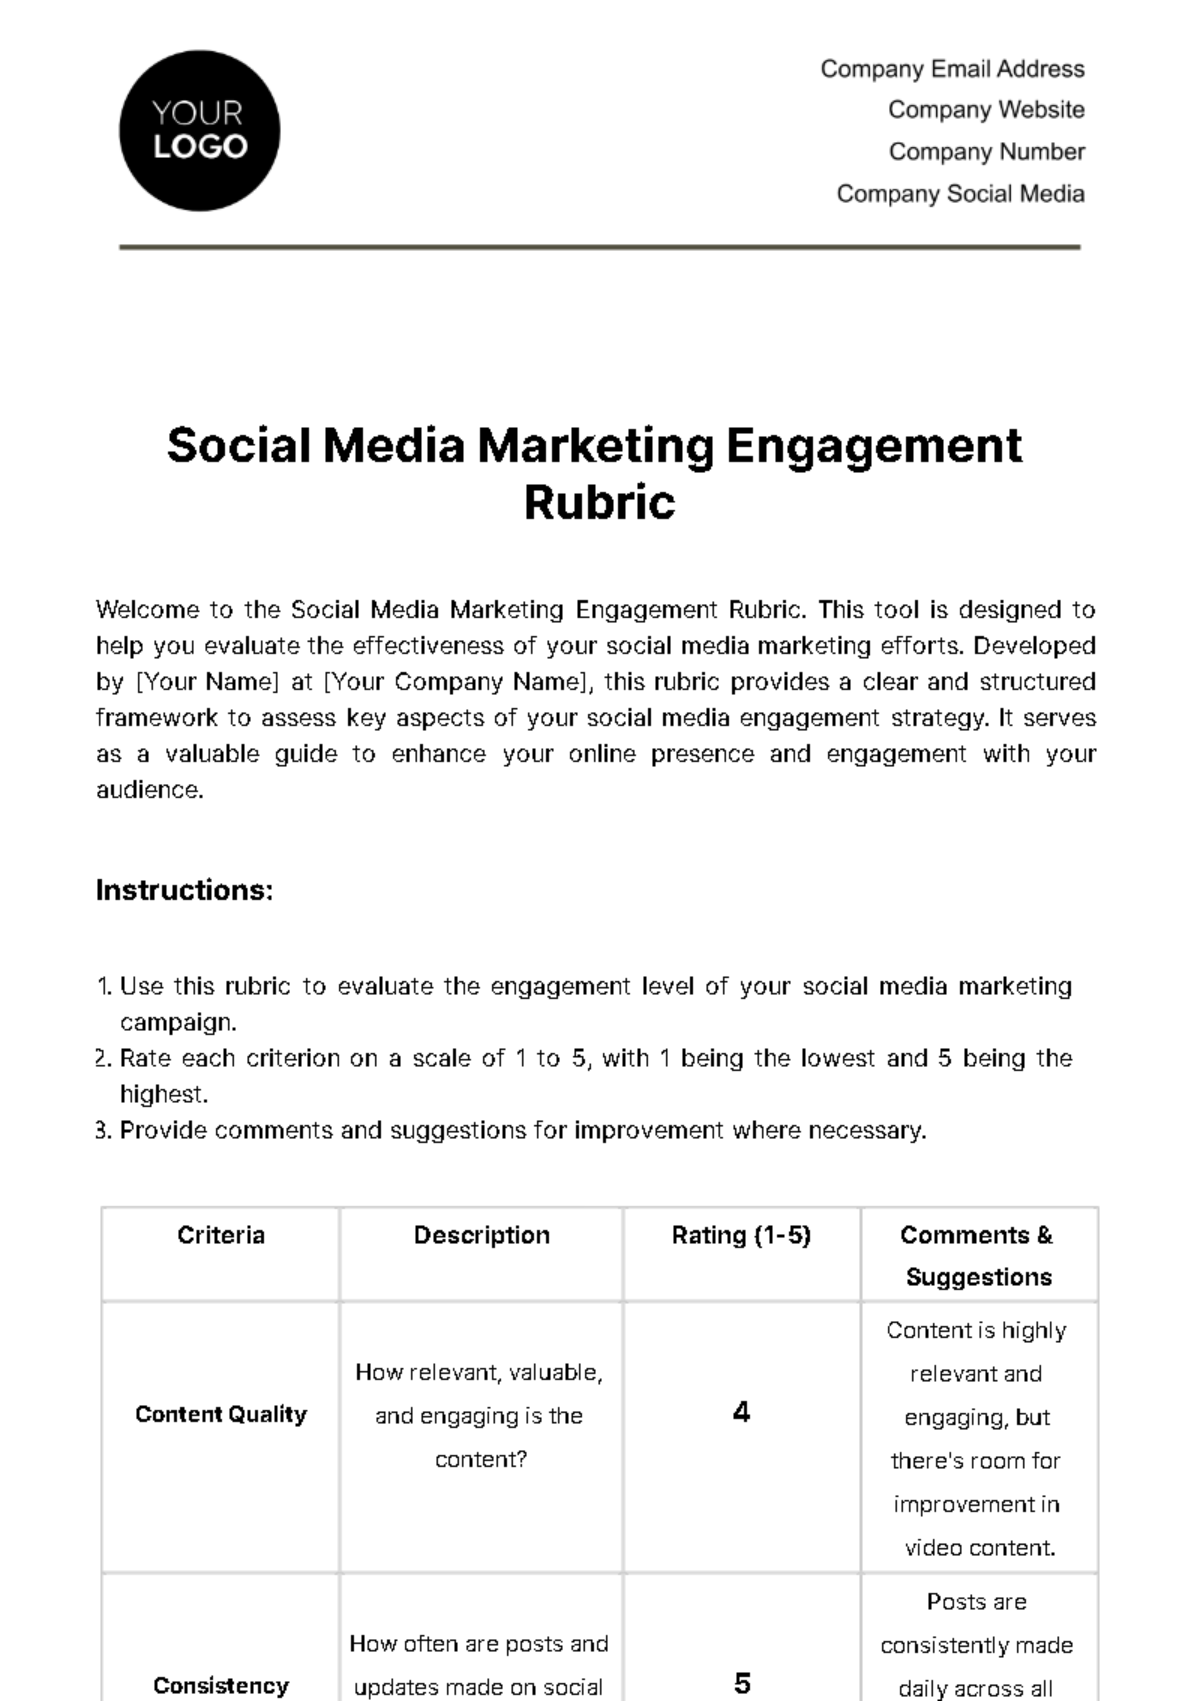 Free Social Media Marketing Engagement Rubric Template